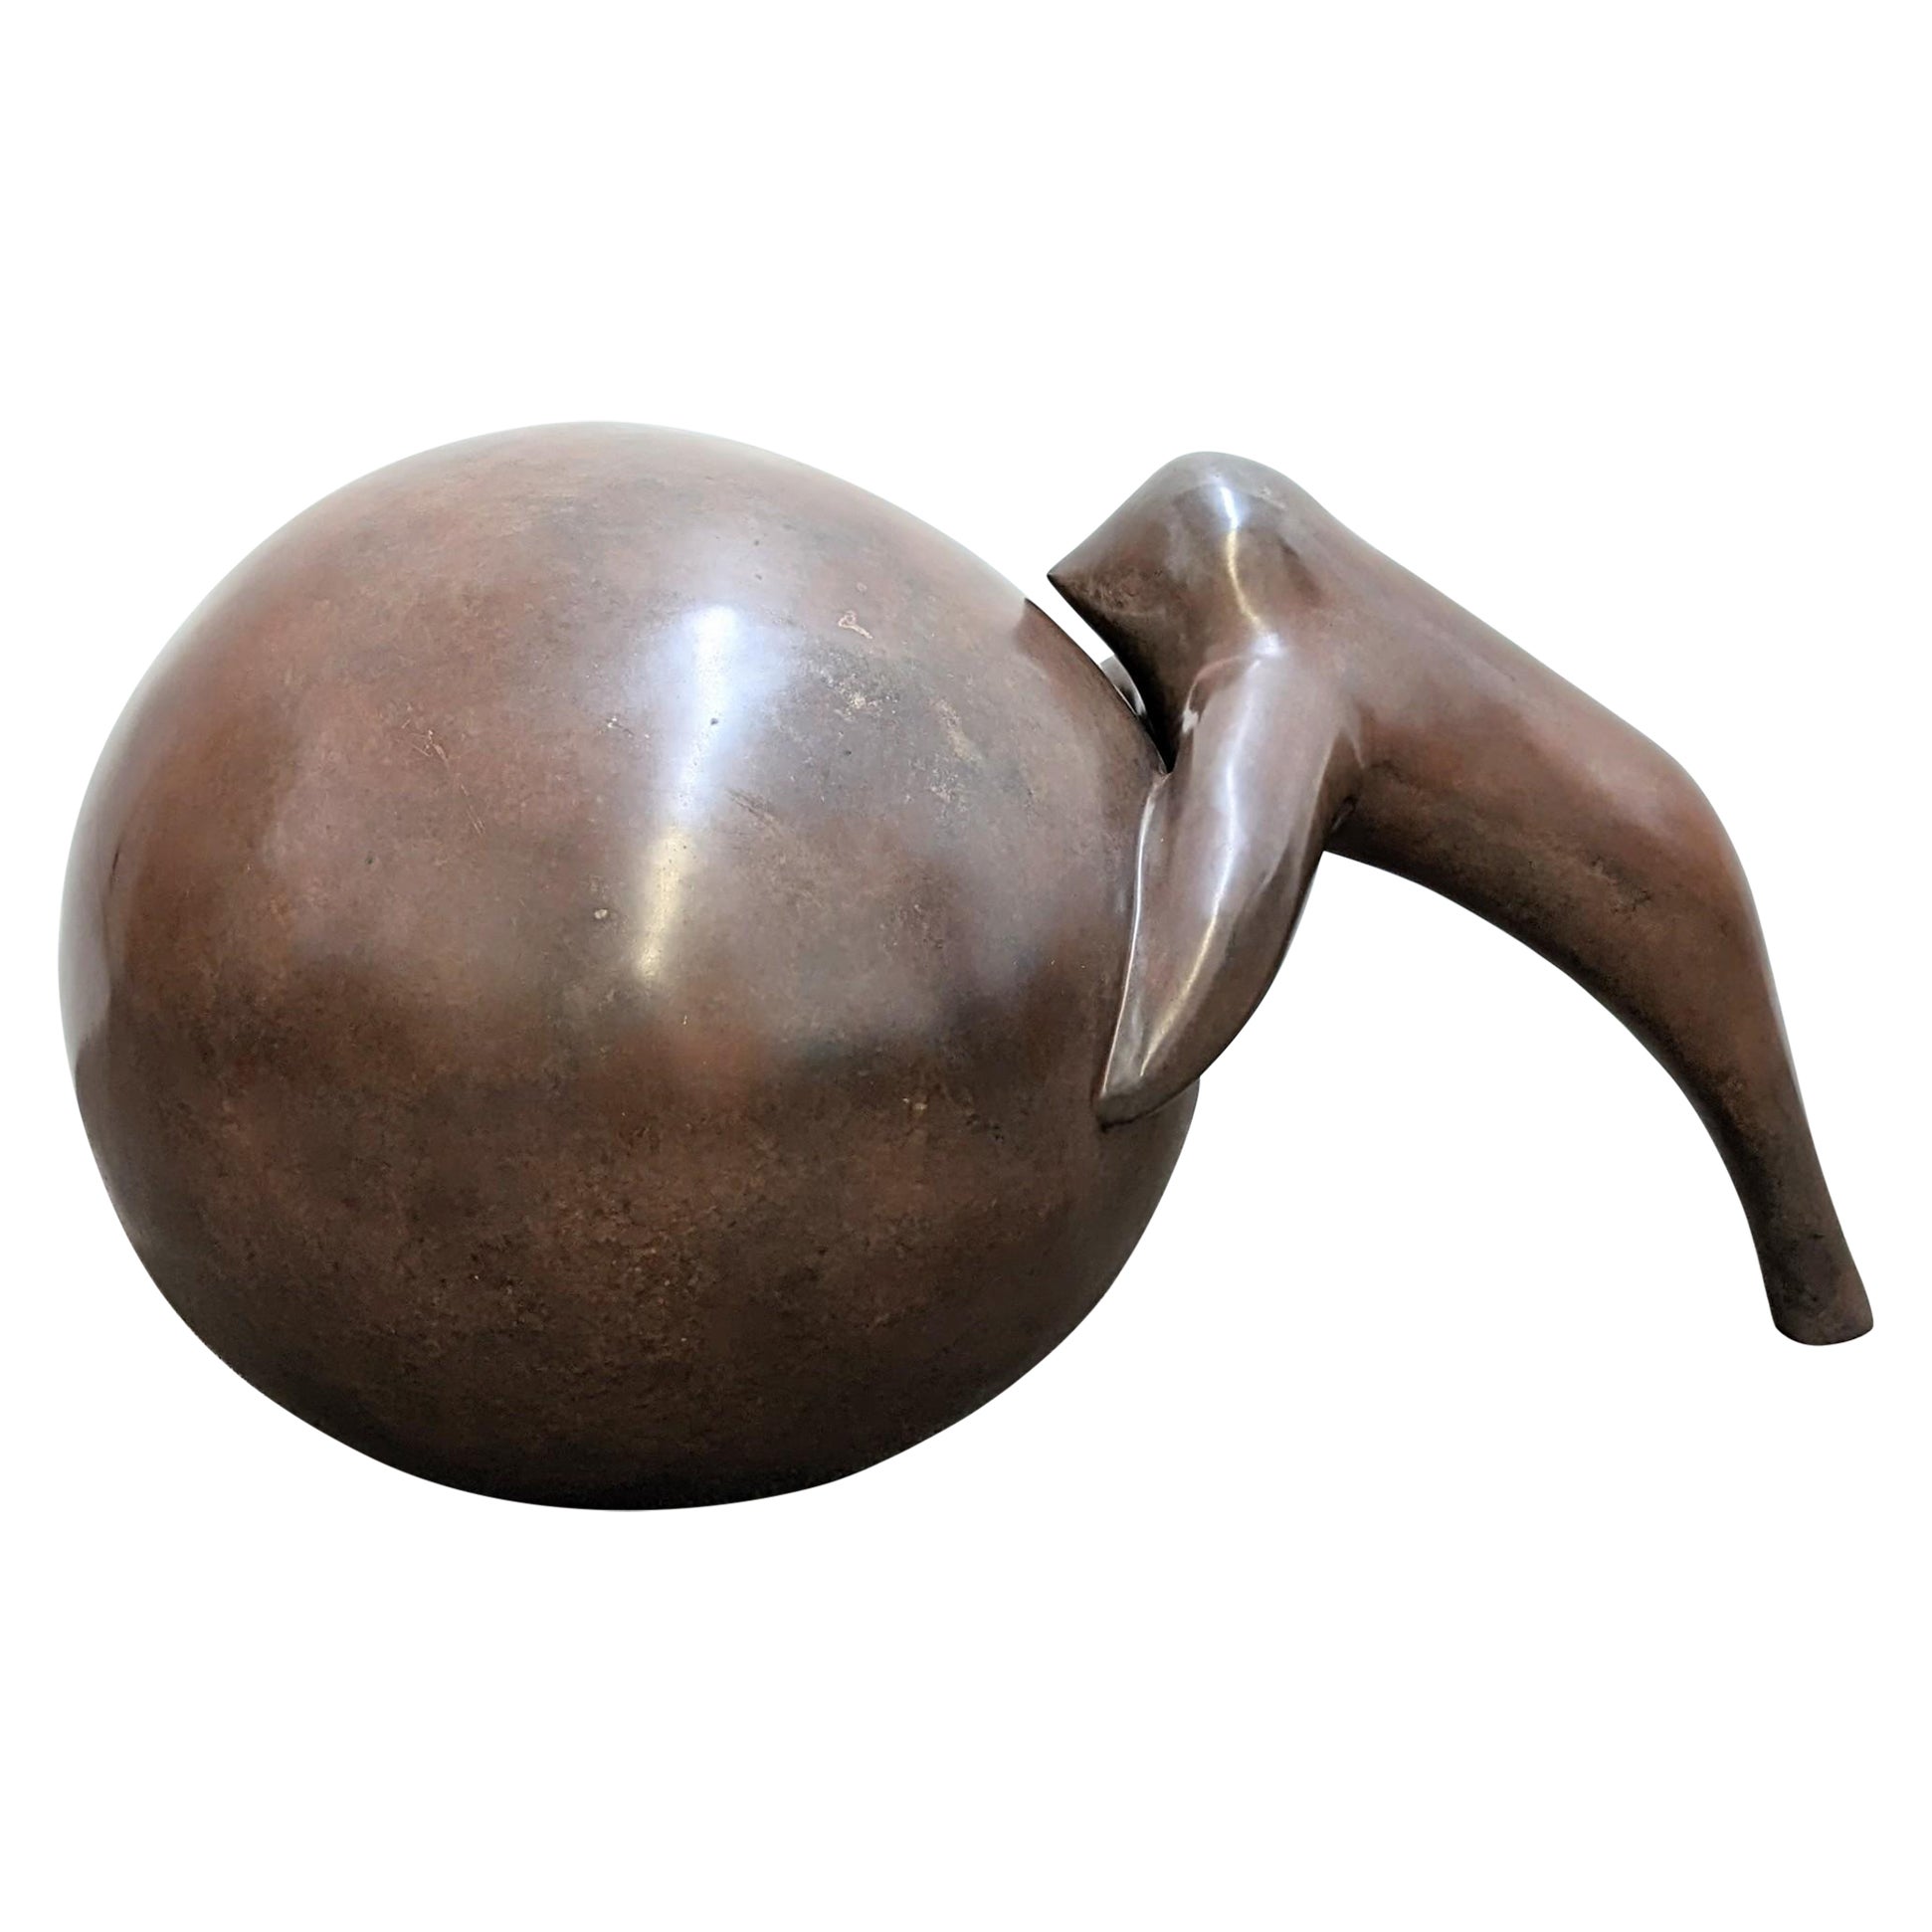 Joel Fisher, Sceau avec boule, sculpture en bronze